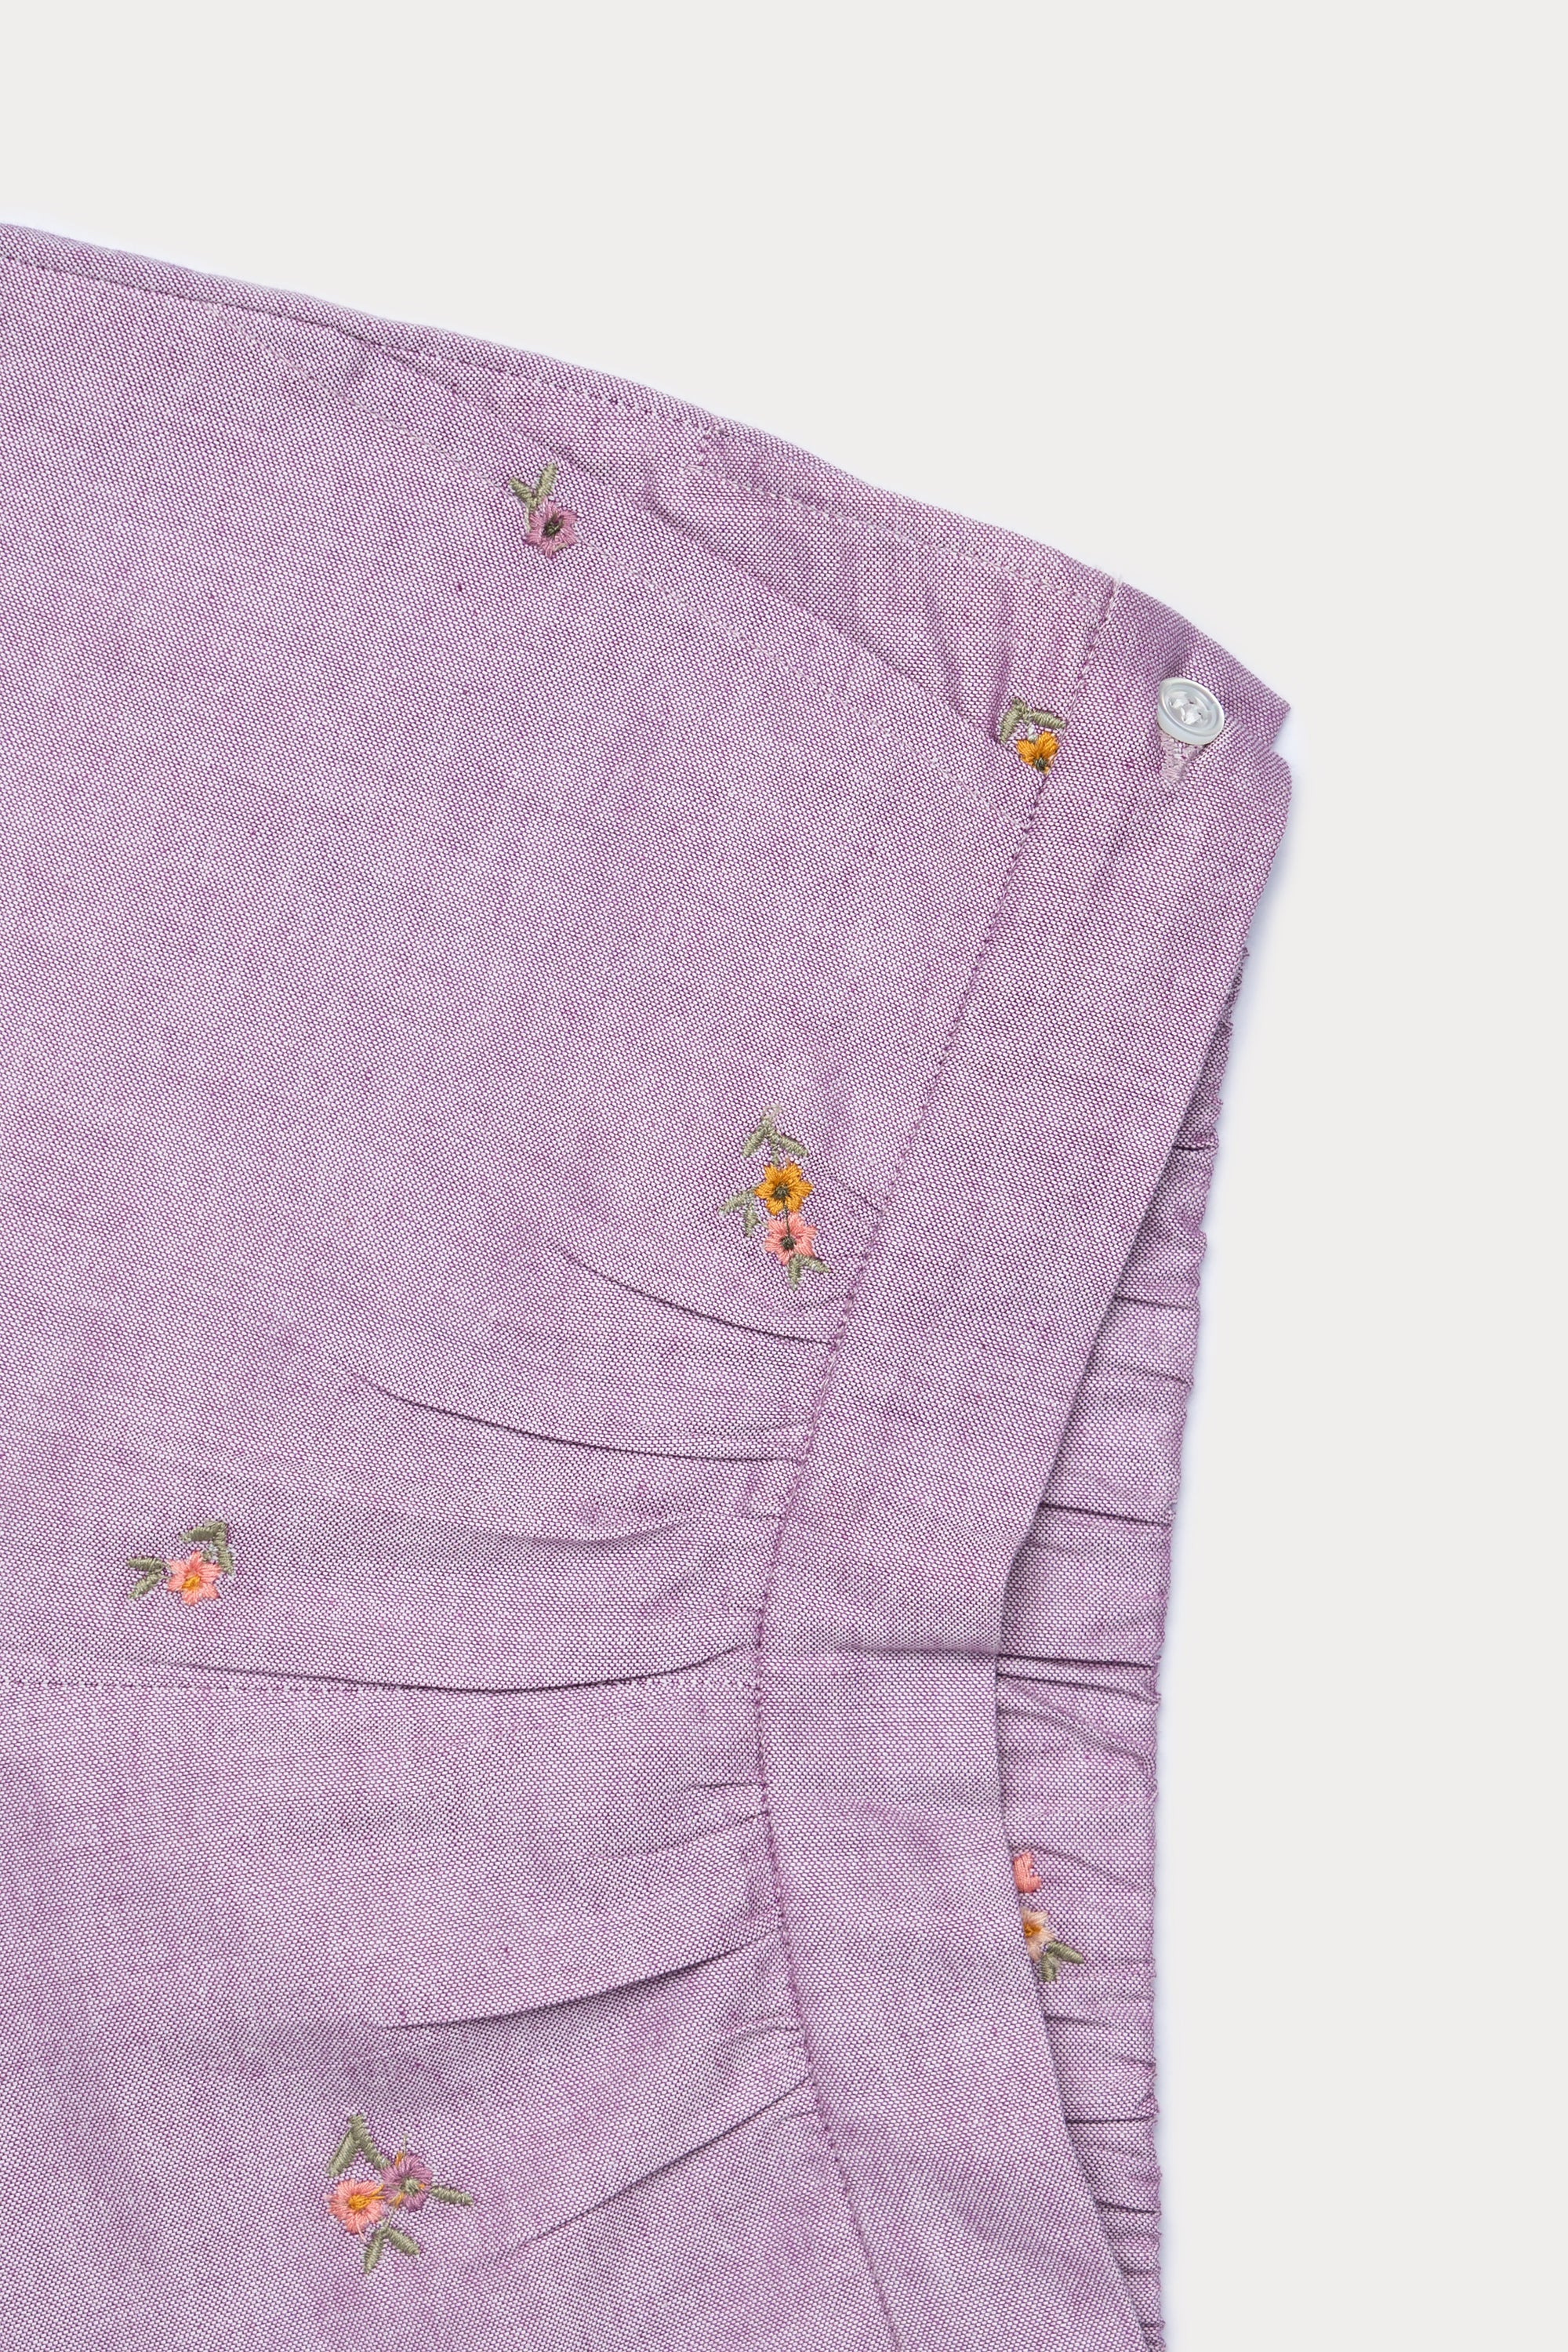 Joseph Shorts | Embroidered Lilac Chambray